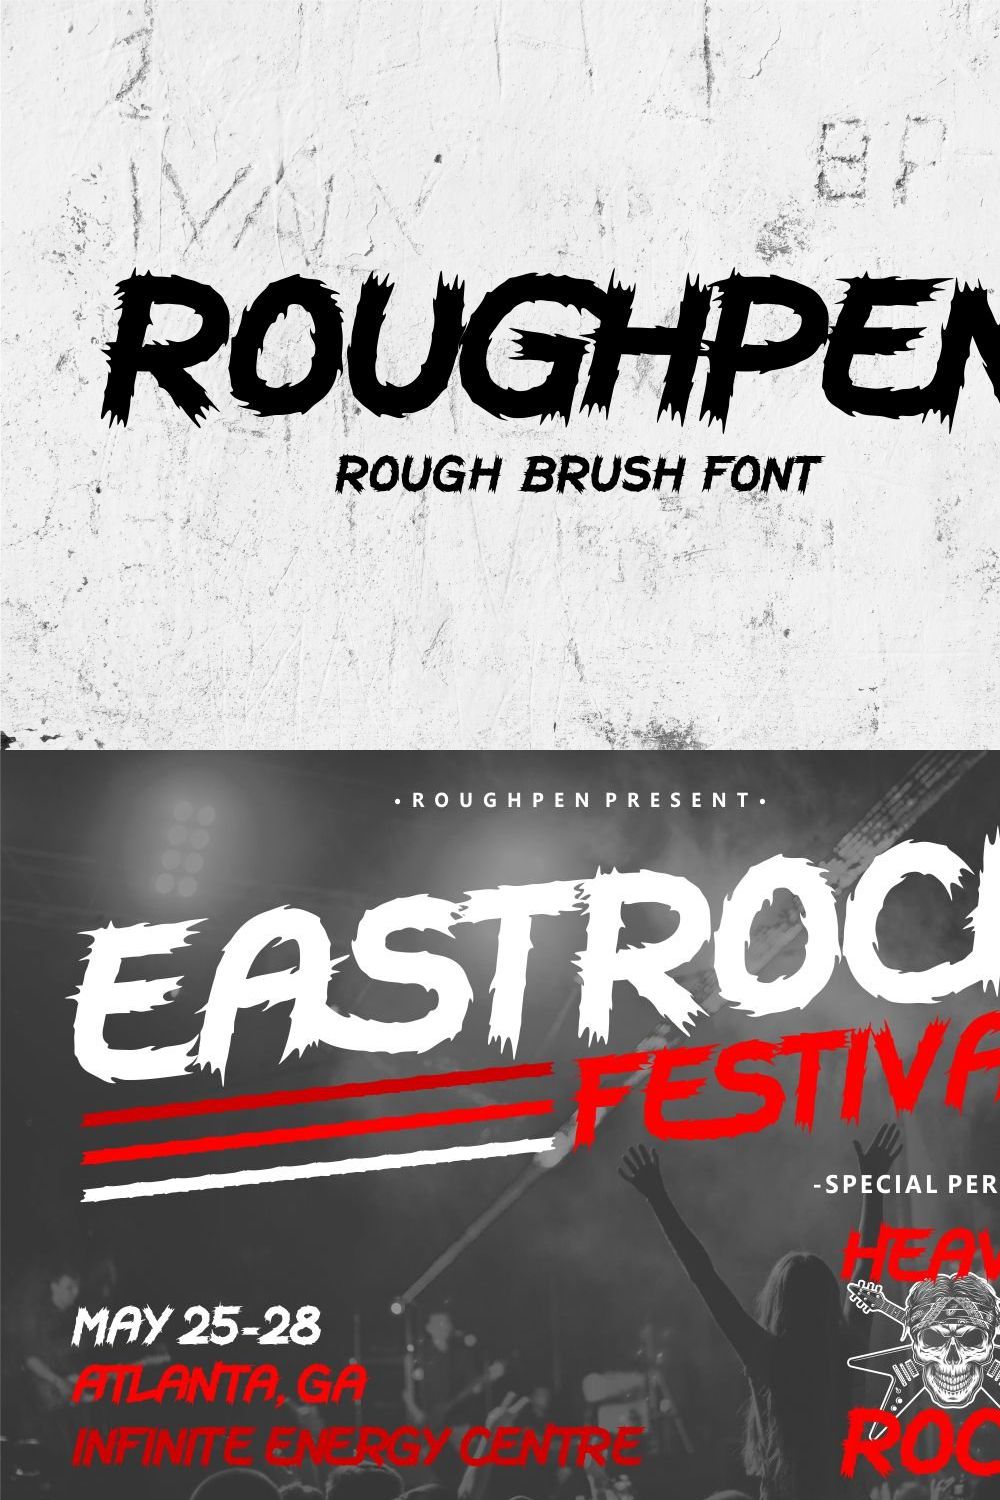 Roughpen - Rough Brush Font pinterest preview image.